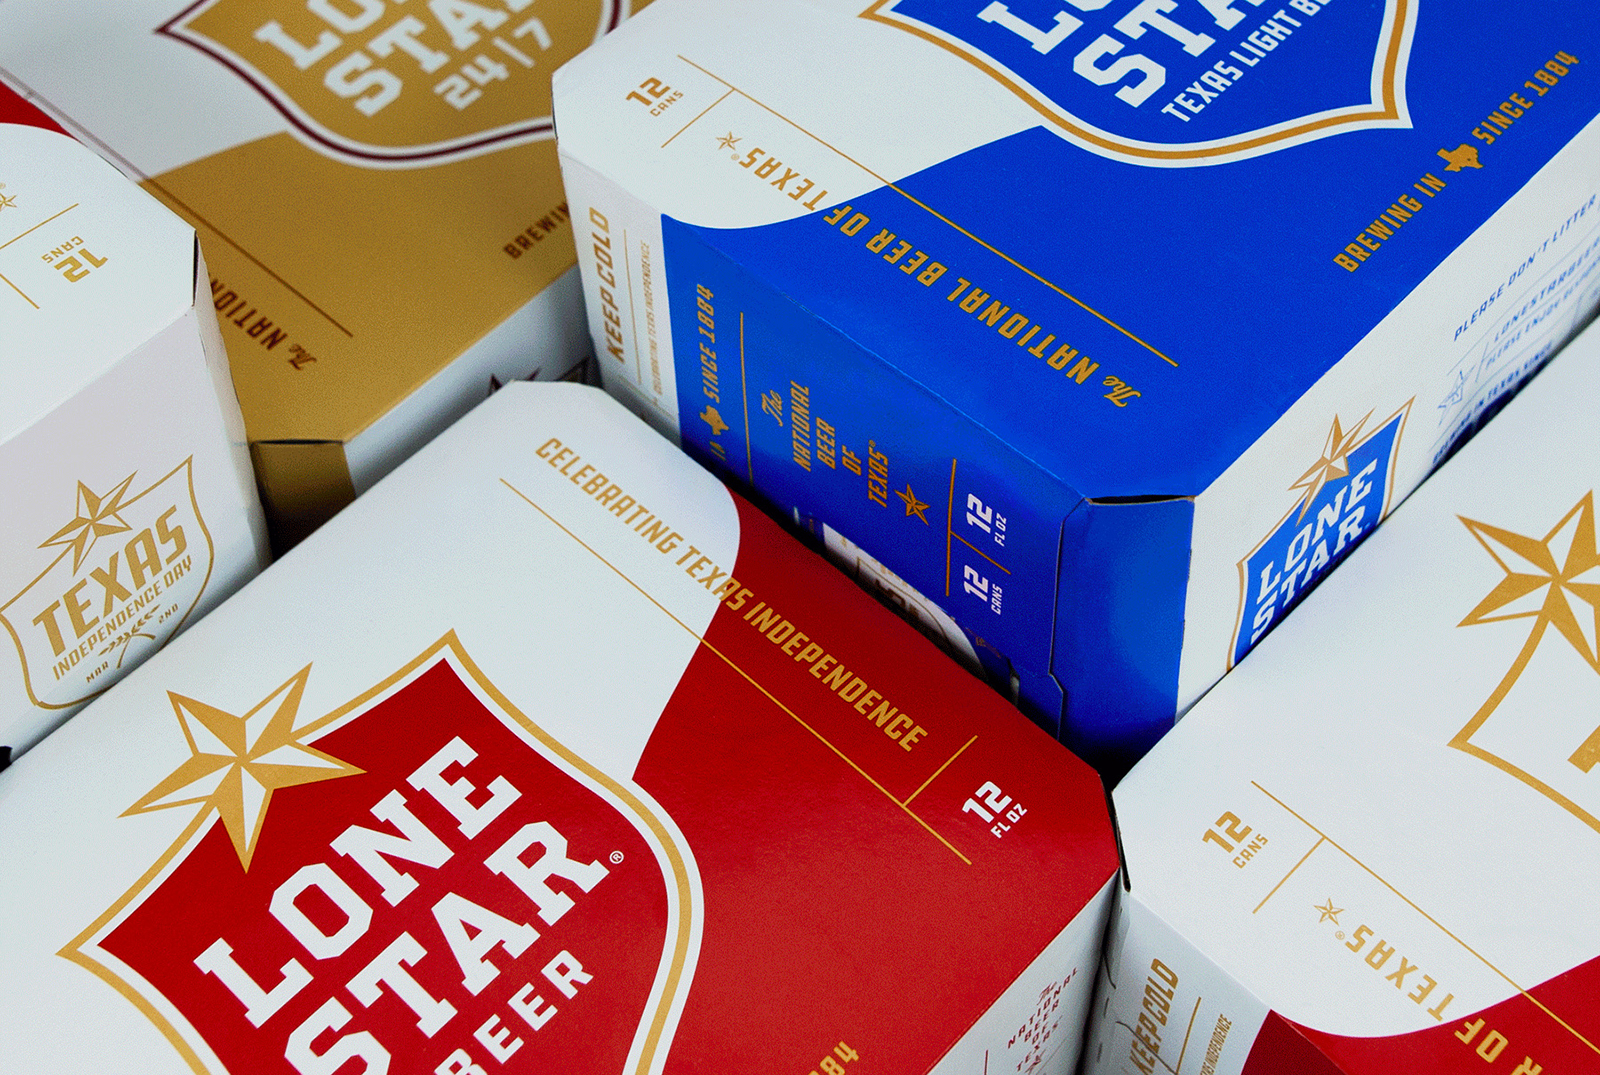  Lone Star孤星啤酒品牌更新全新的品牌VI视觉和包装设计-深圳VI设计18